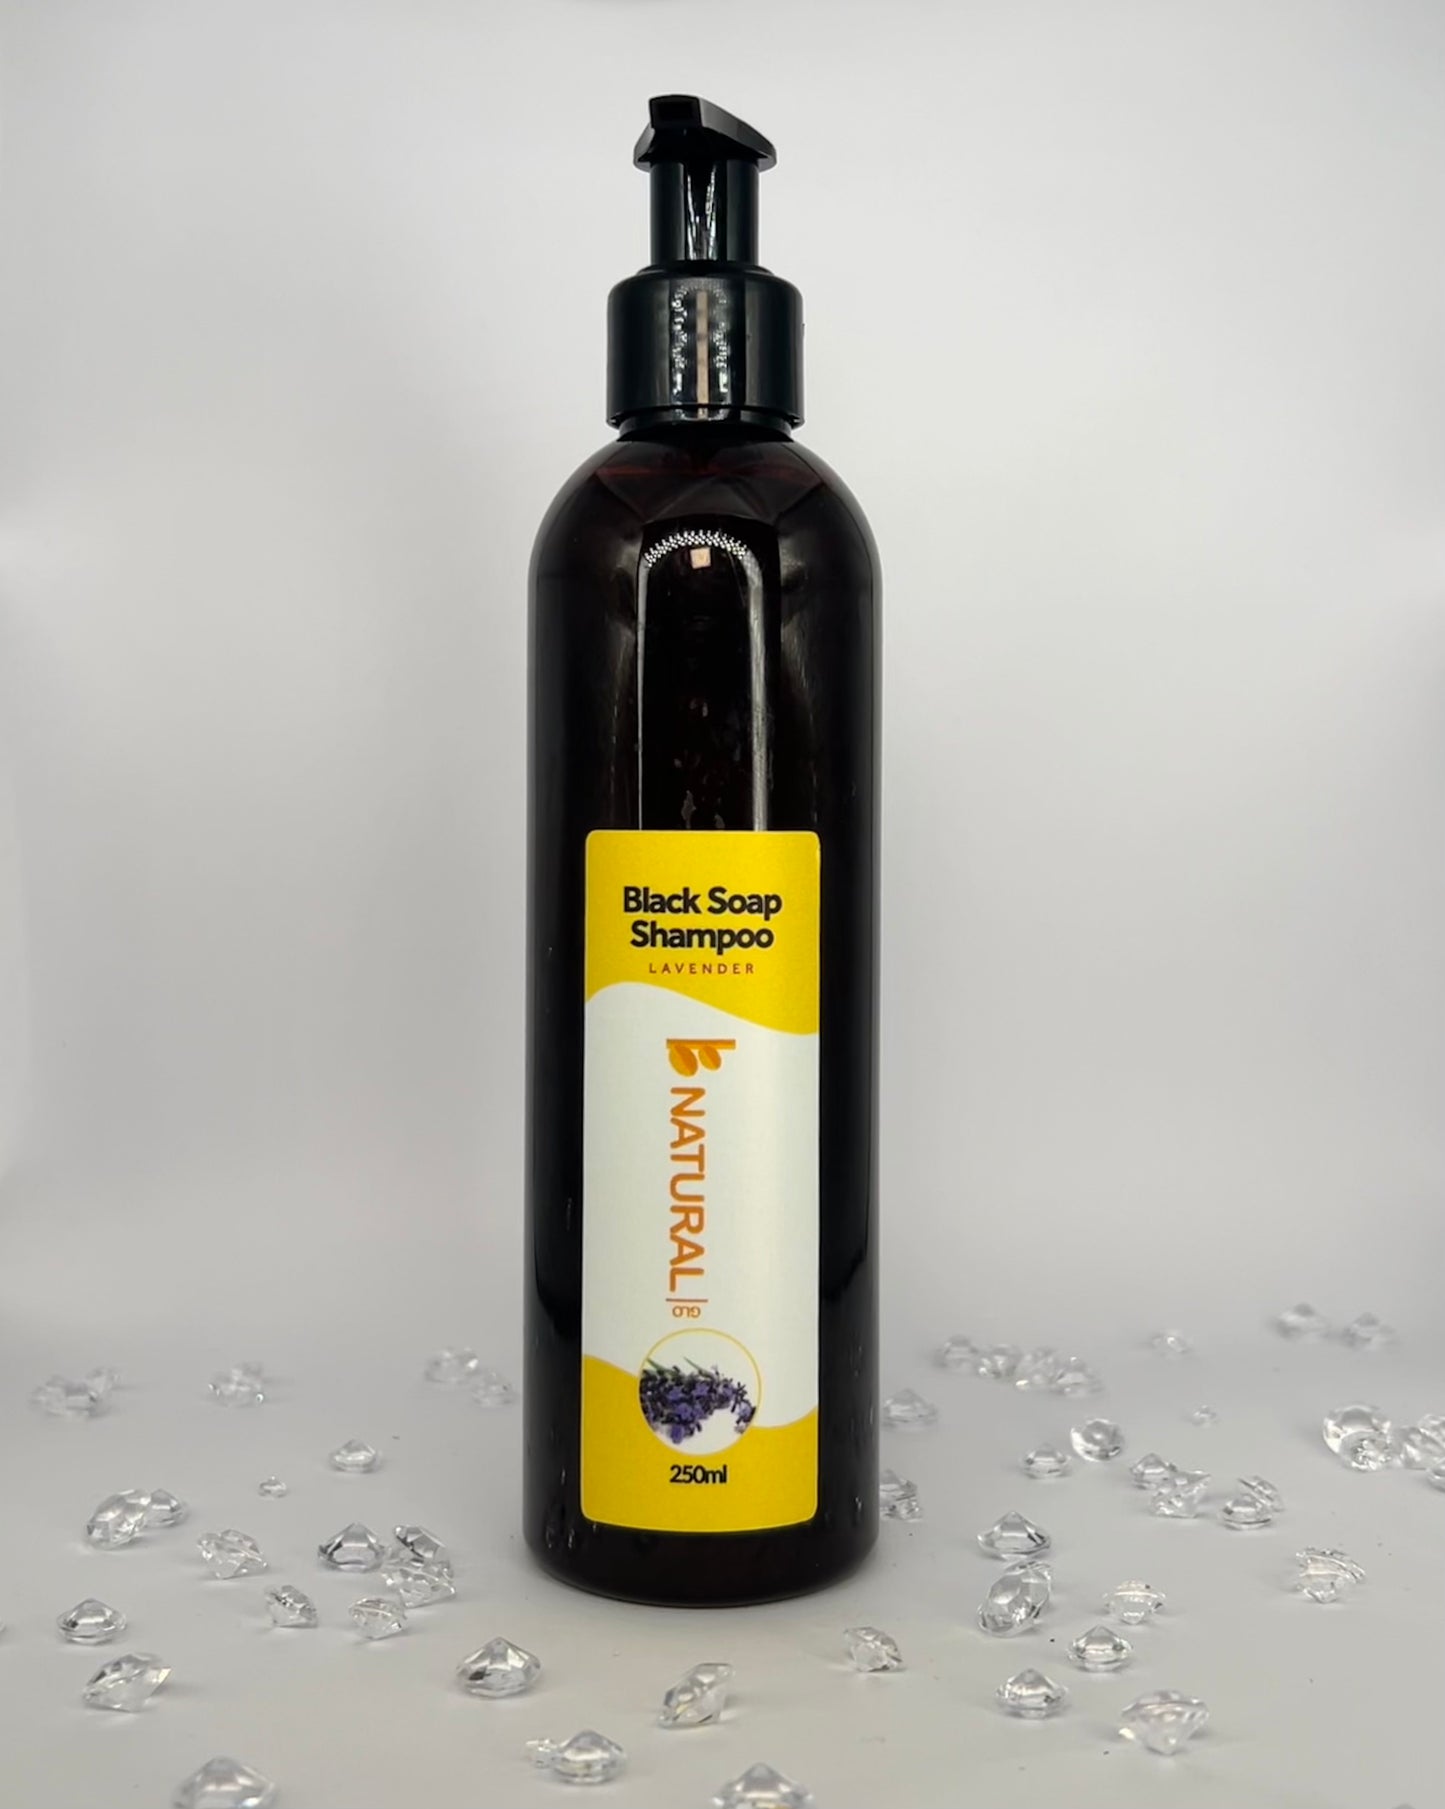 Black soap shampoo - Lavender 250ml